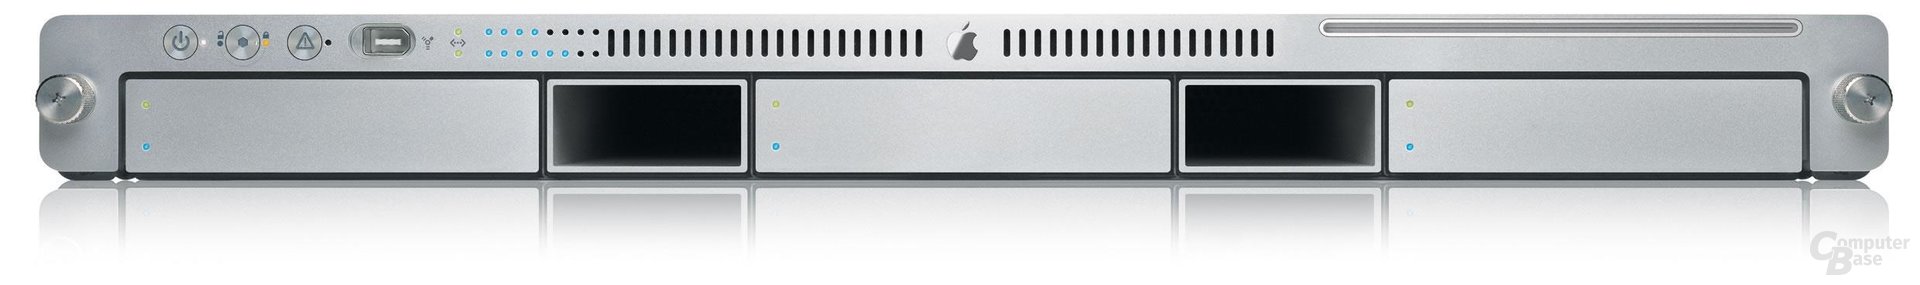 Apple Xserve G5